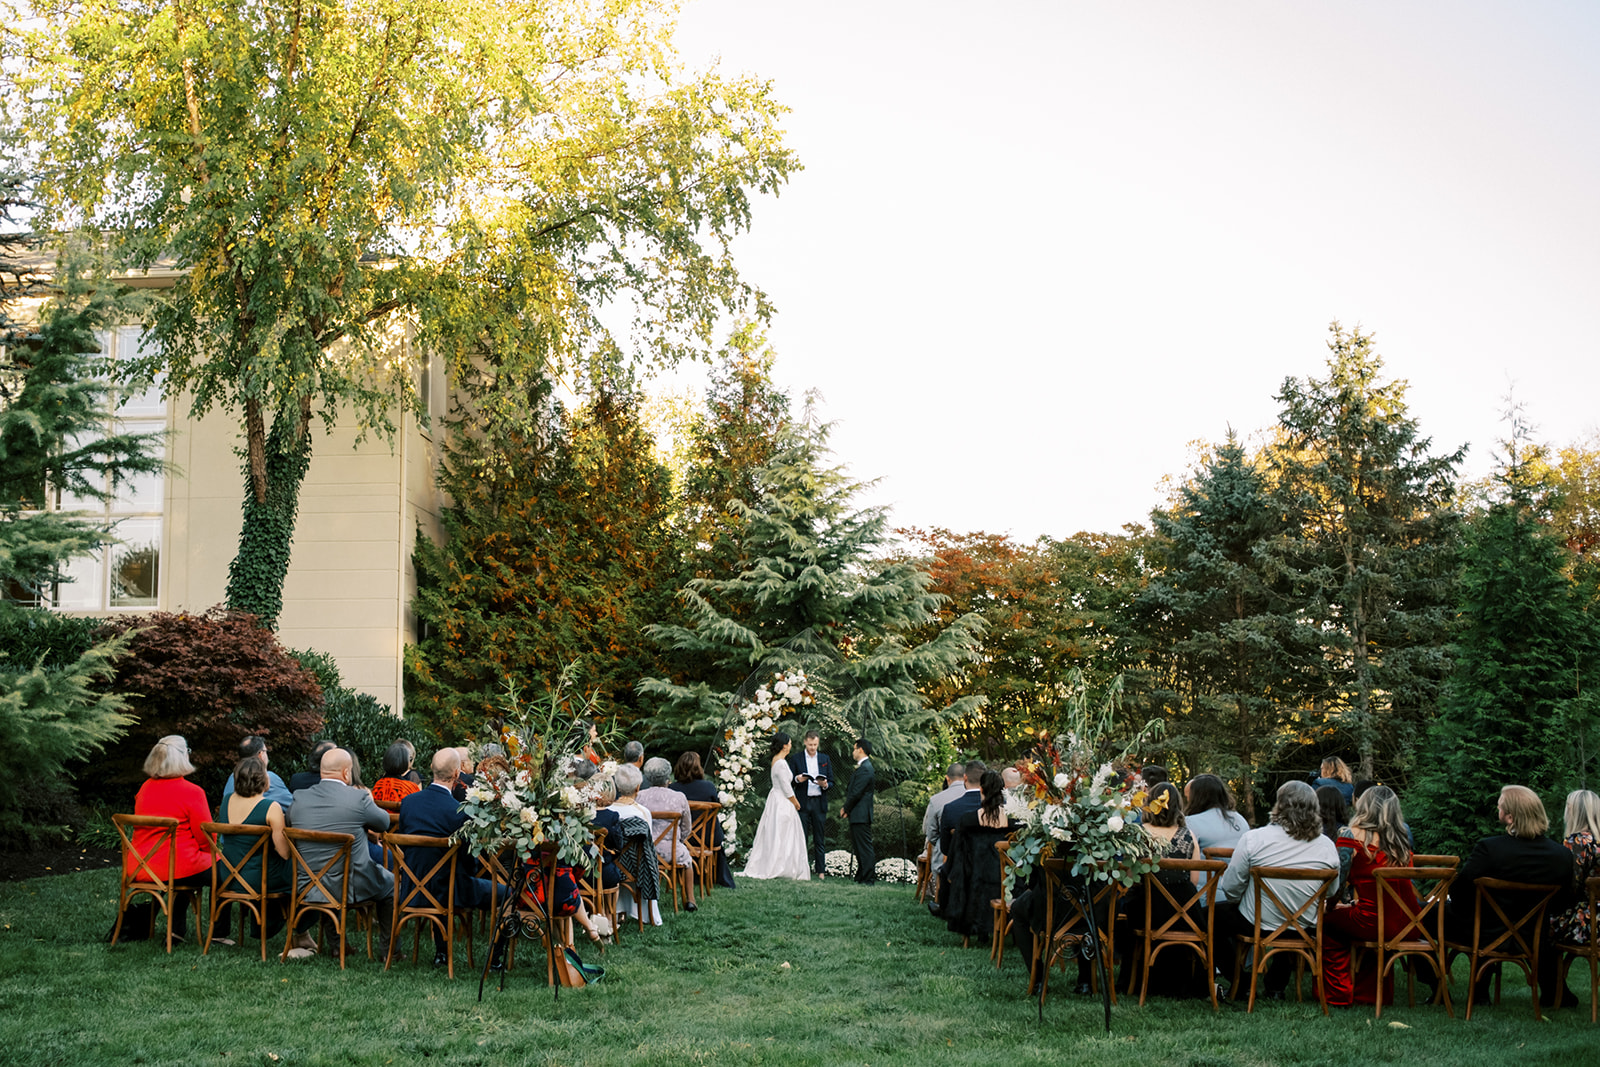 Maryland private residence backyard wedding ceremony